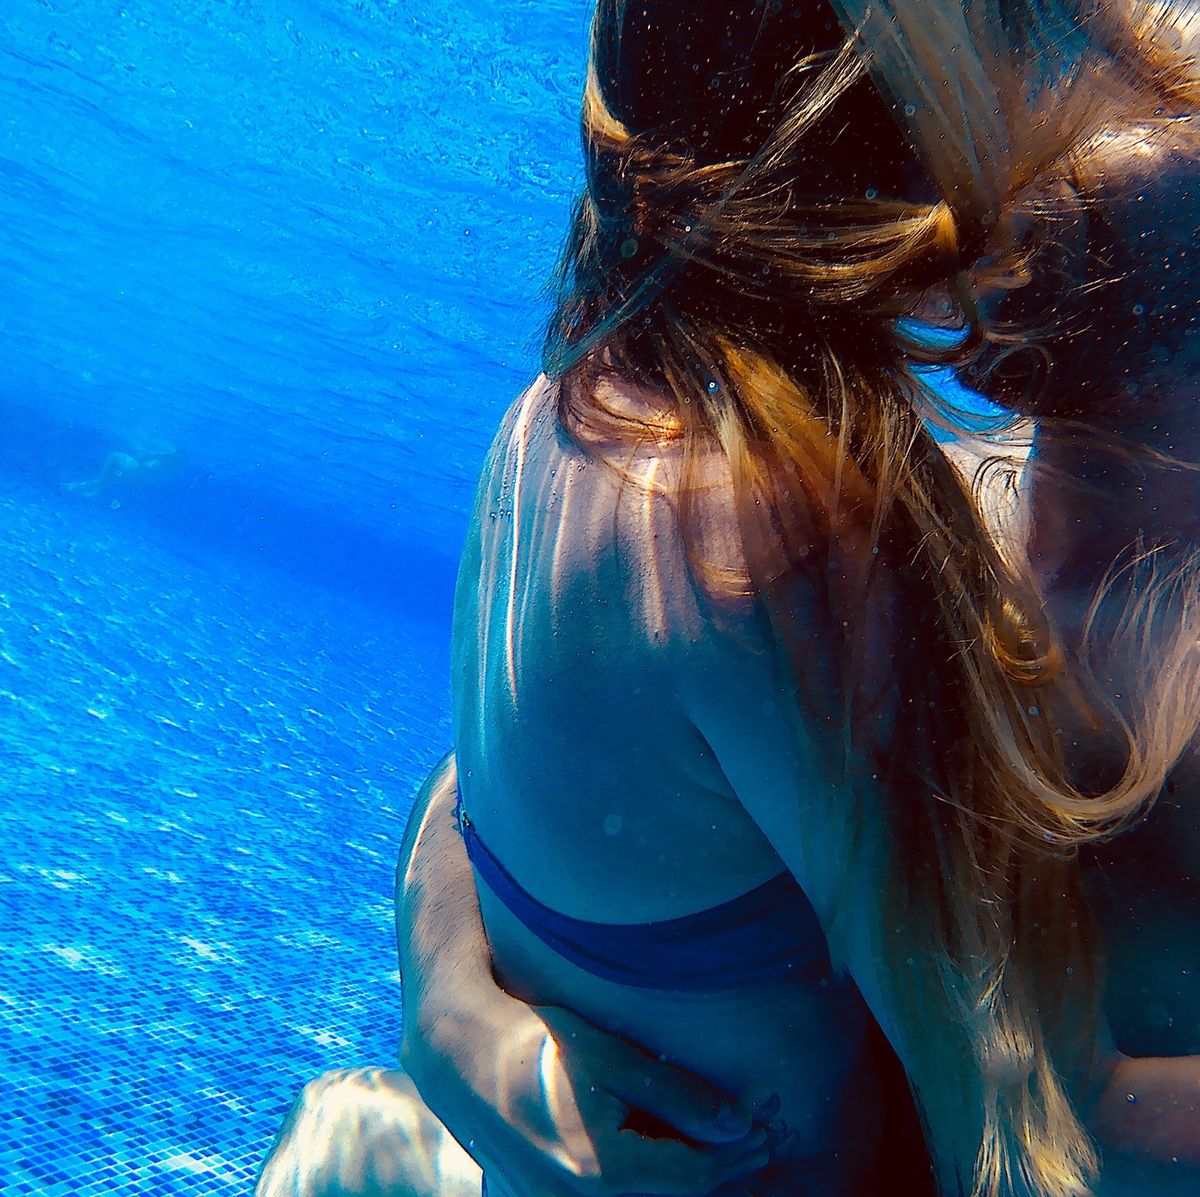 Best Underwater Sex - Underwater Sex Tips - How to Have Underwater Sex